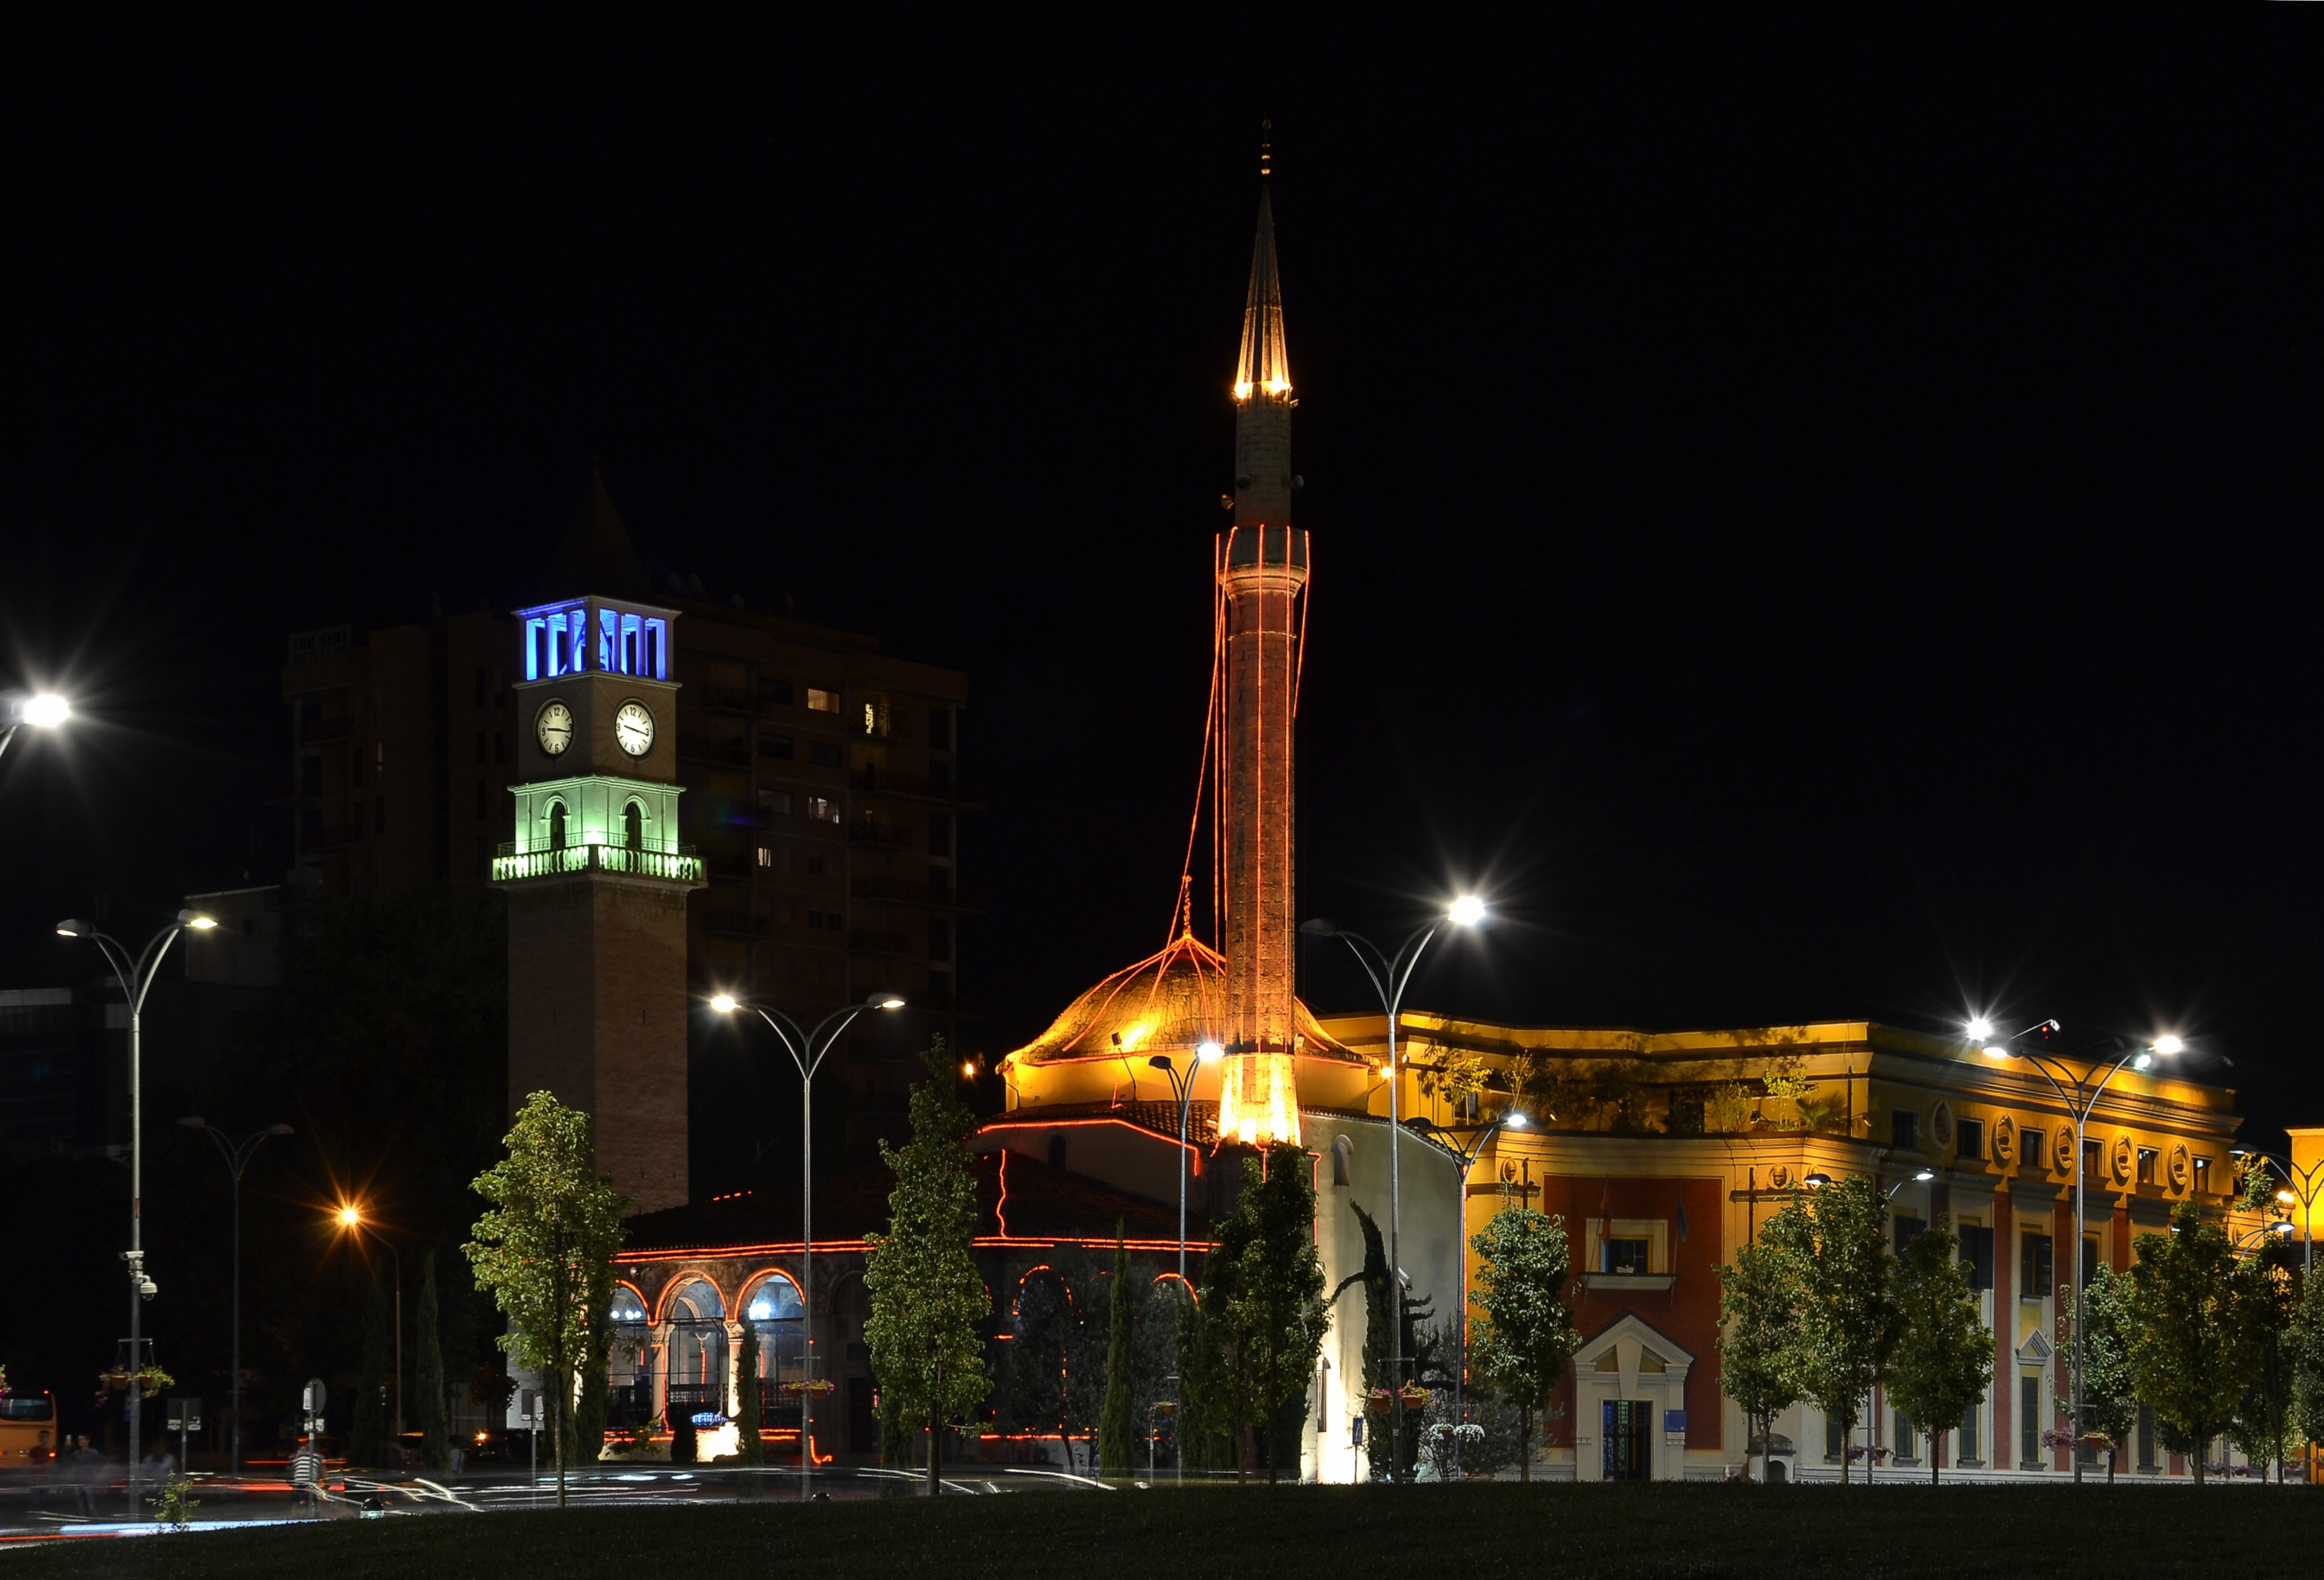 Ethem Bey mosque by night, Tirana (by Pudelek)